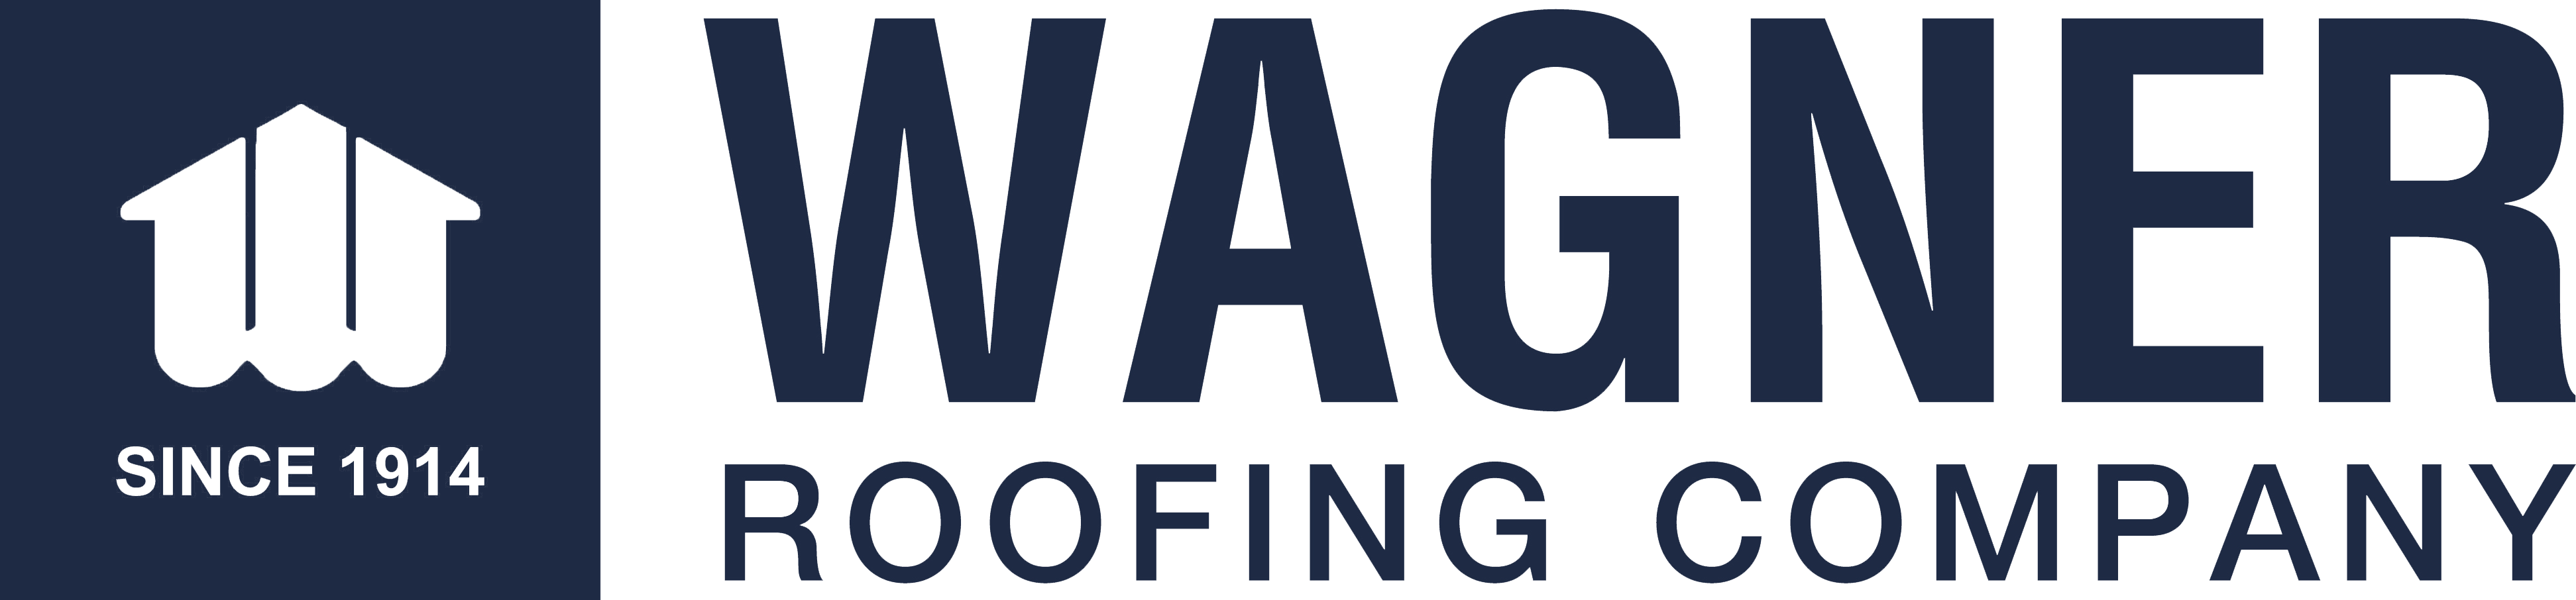 Wagner Roofing Company Company Logo